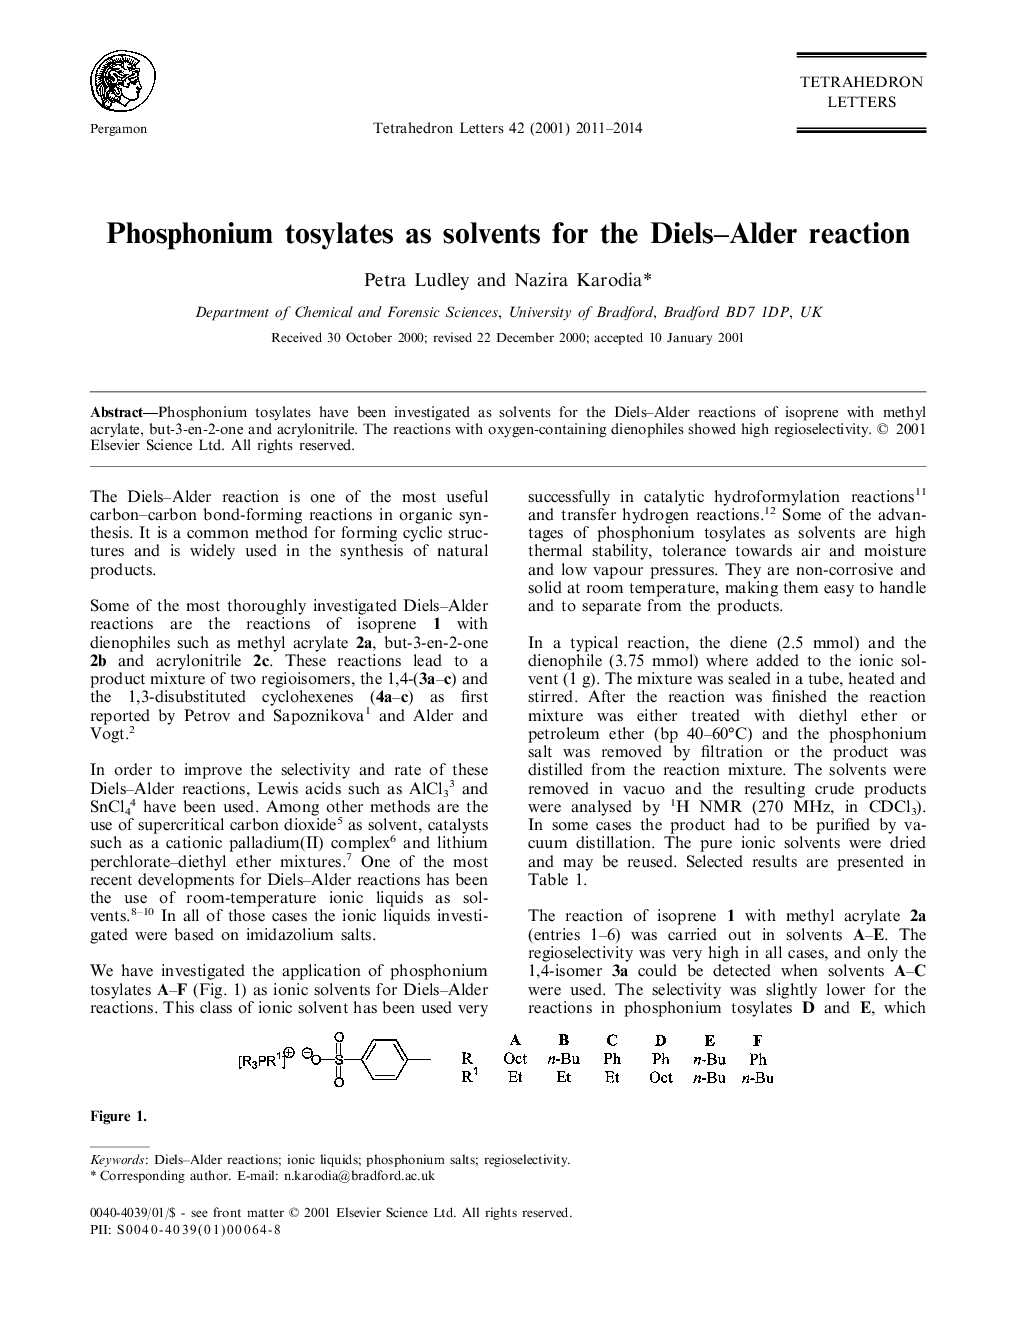 Phosphonium tosylates as solvents for the Diels-Alder reaction